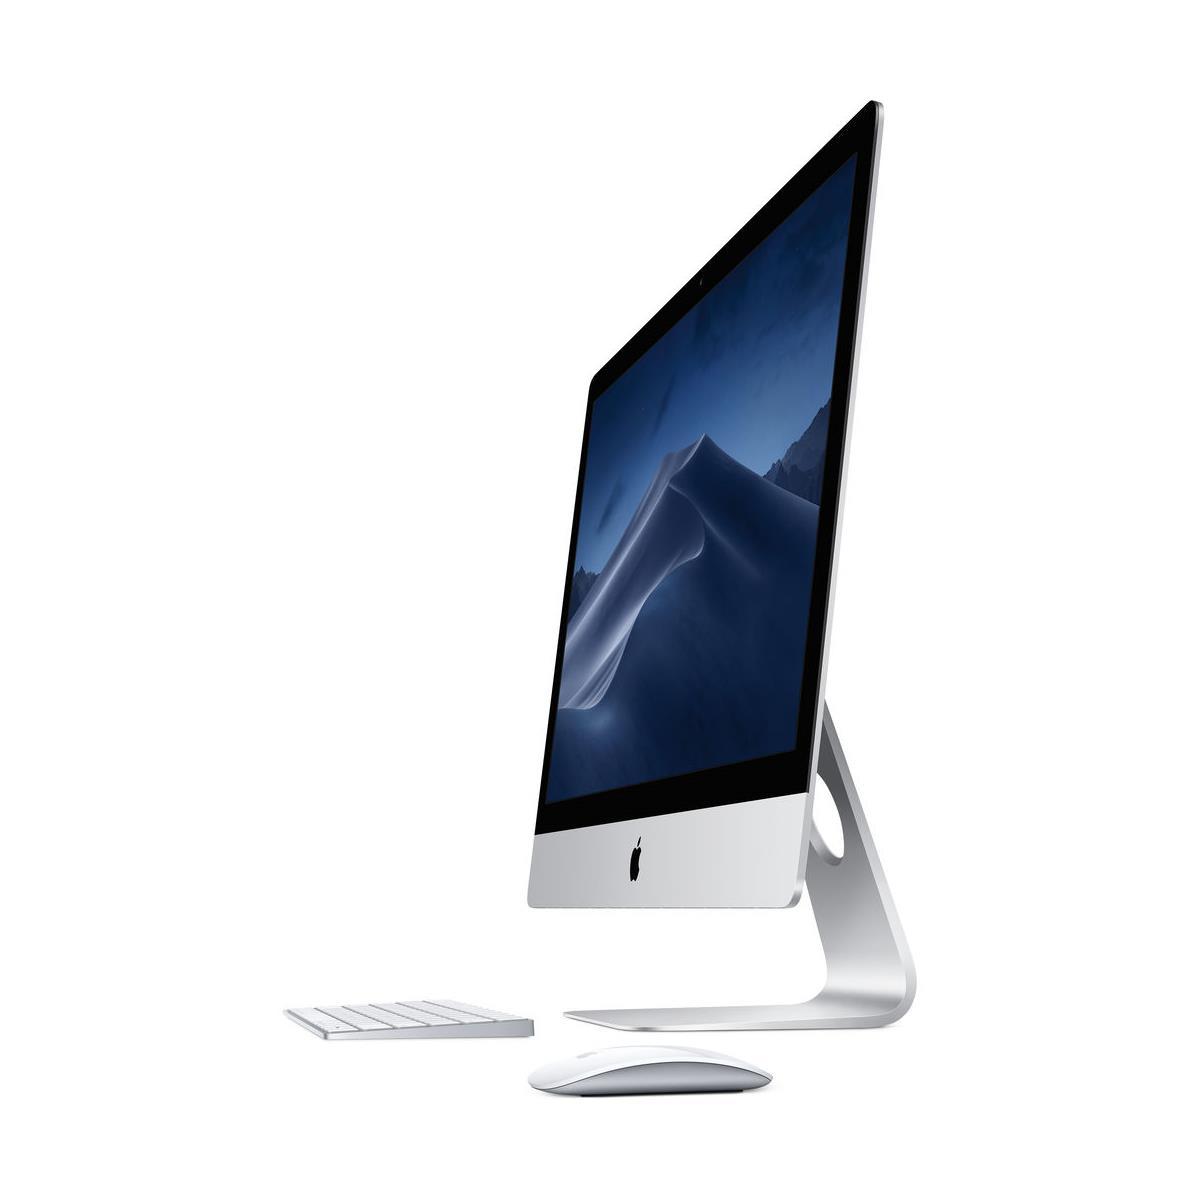 2017 27″ iMac with Retina 5K display 4.2GHz quad-core Intel Core